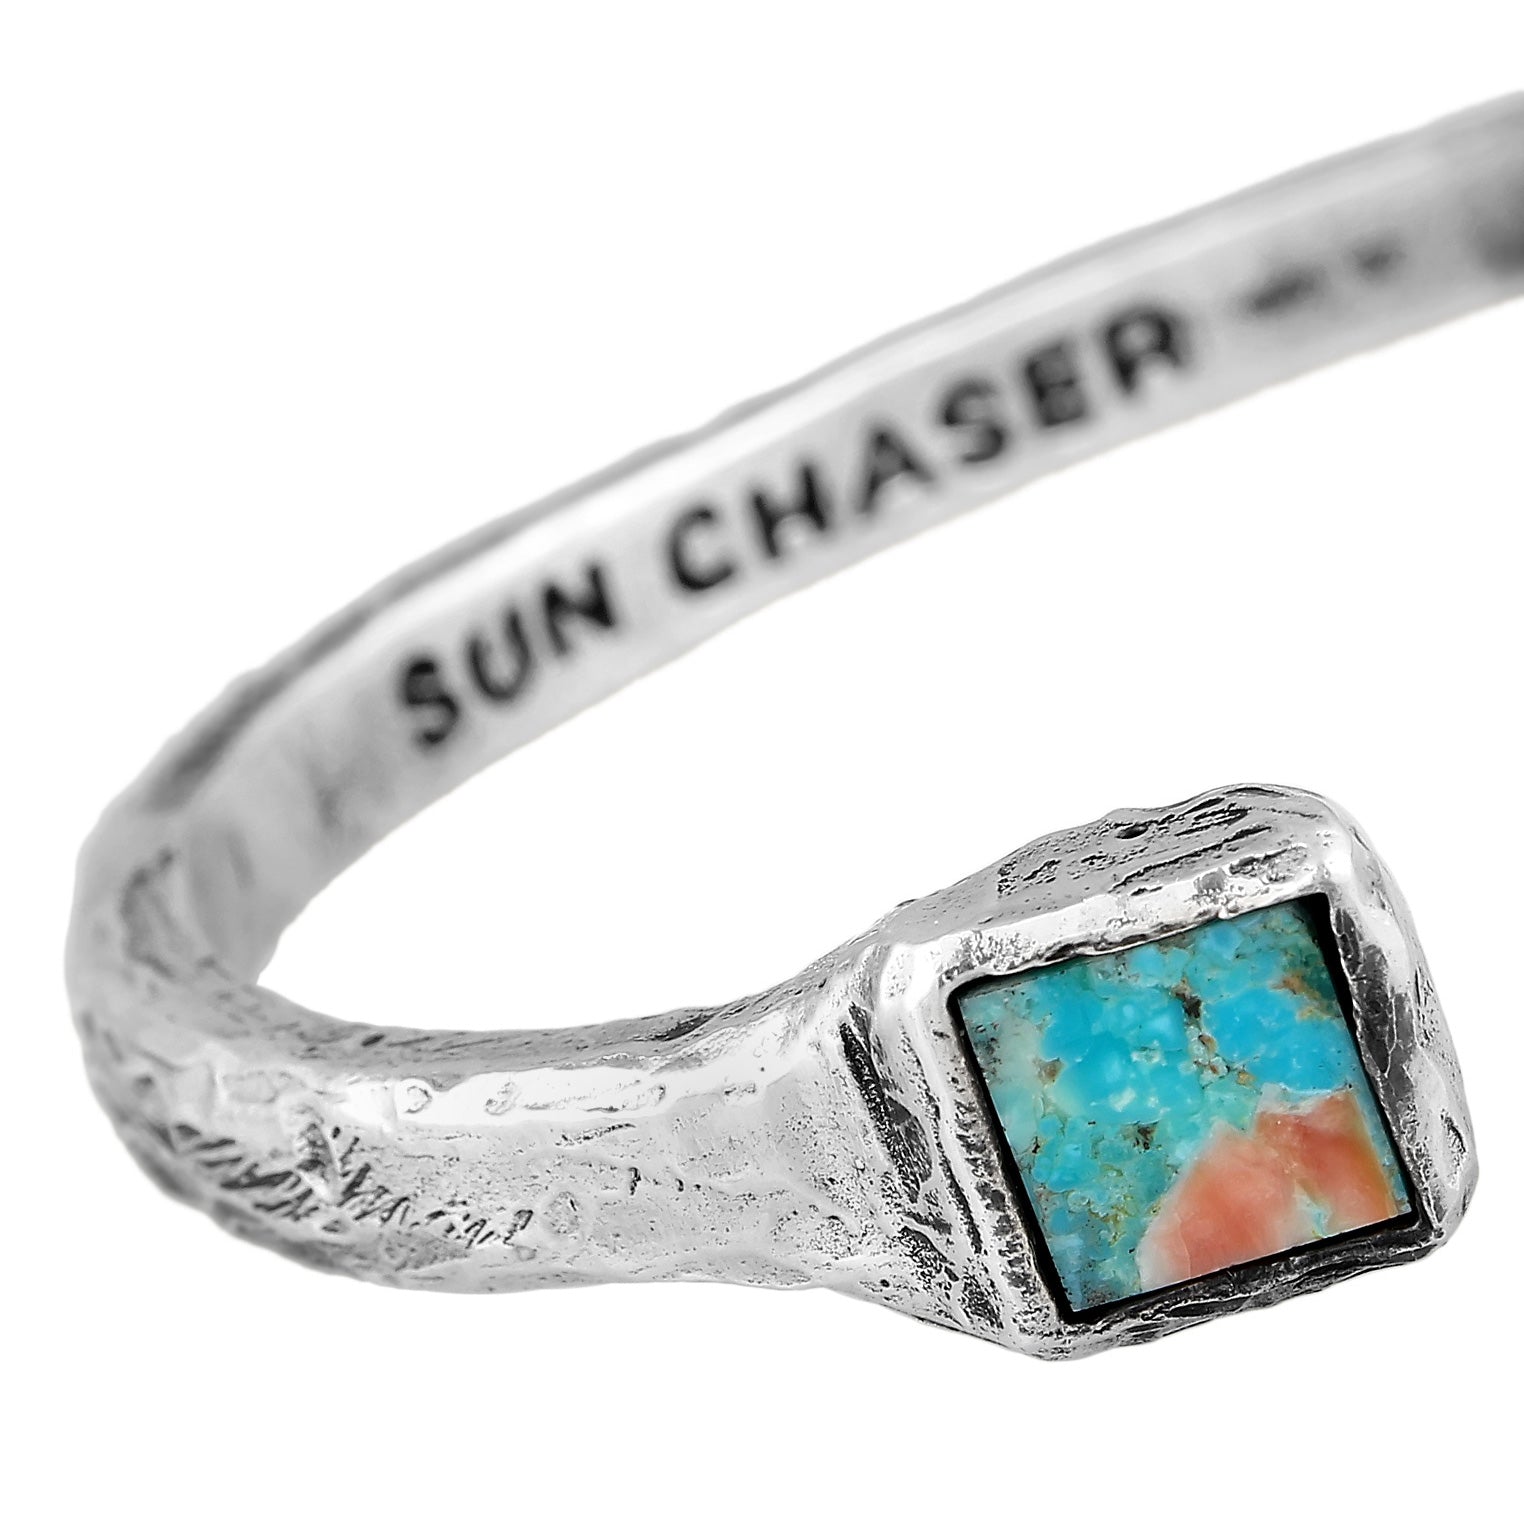 Silber - HAZE & GLORY | Sun Chaser Armreif